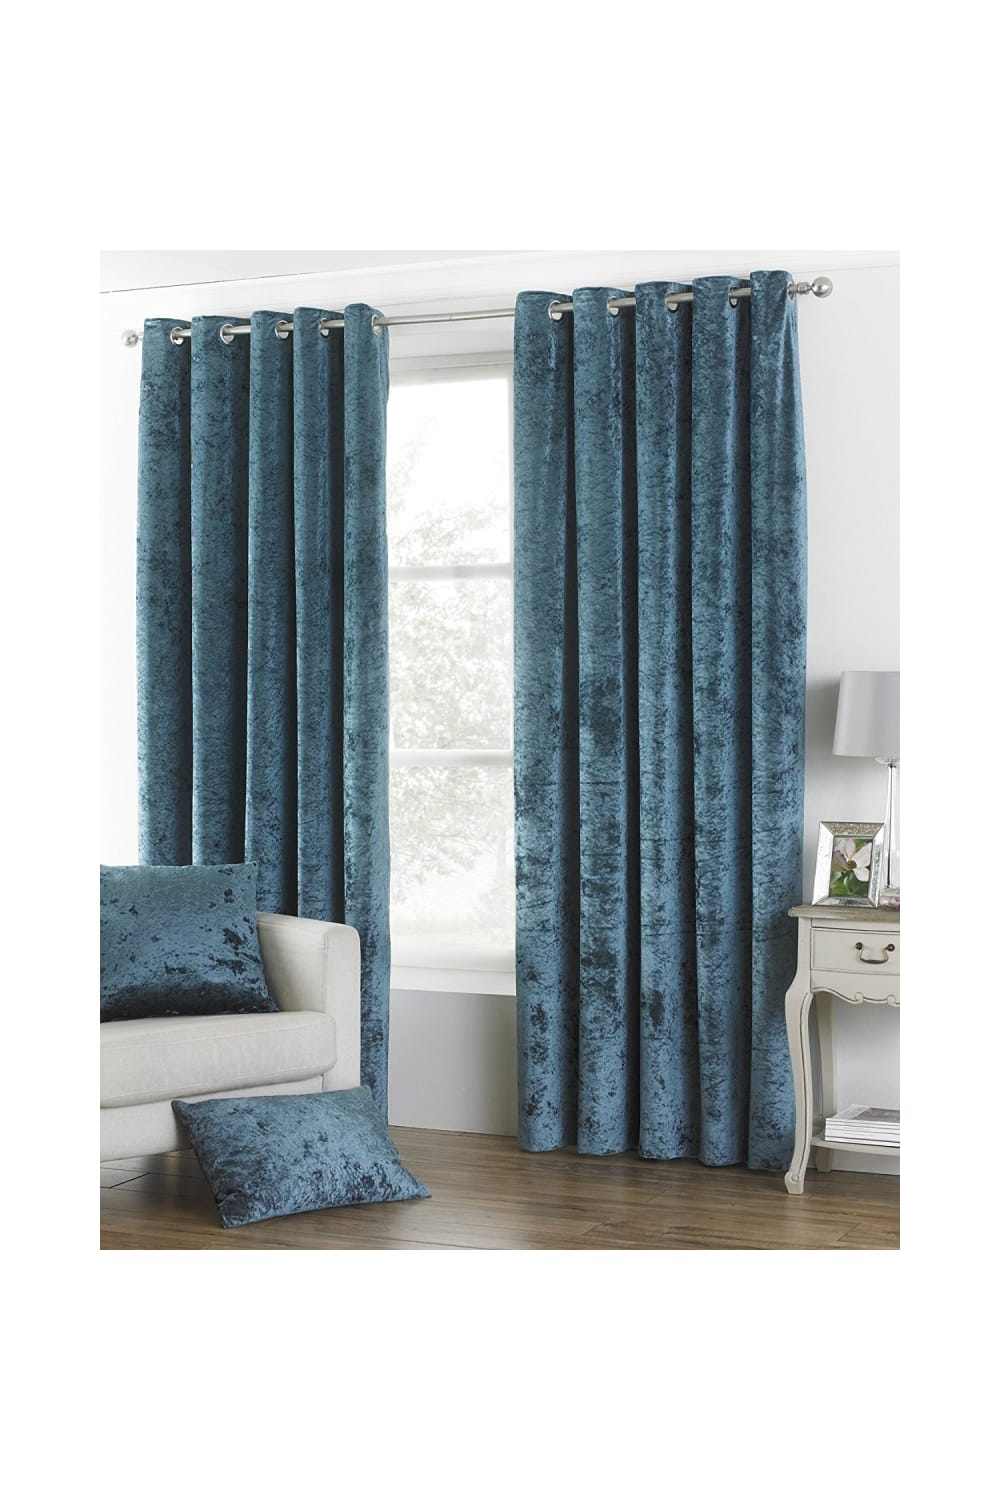 Riva Home Verona Velvet Style Eyelet Curtains (Teal) (90 x 90in (229 x 229cm))